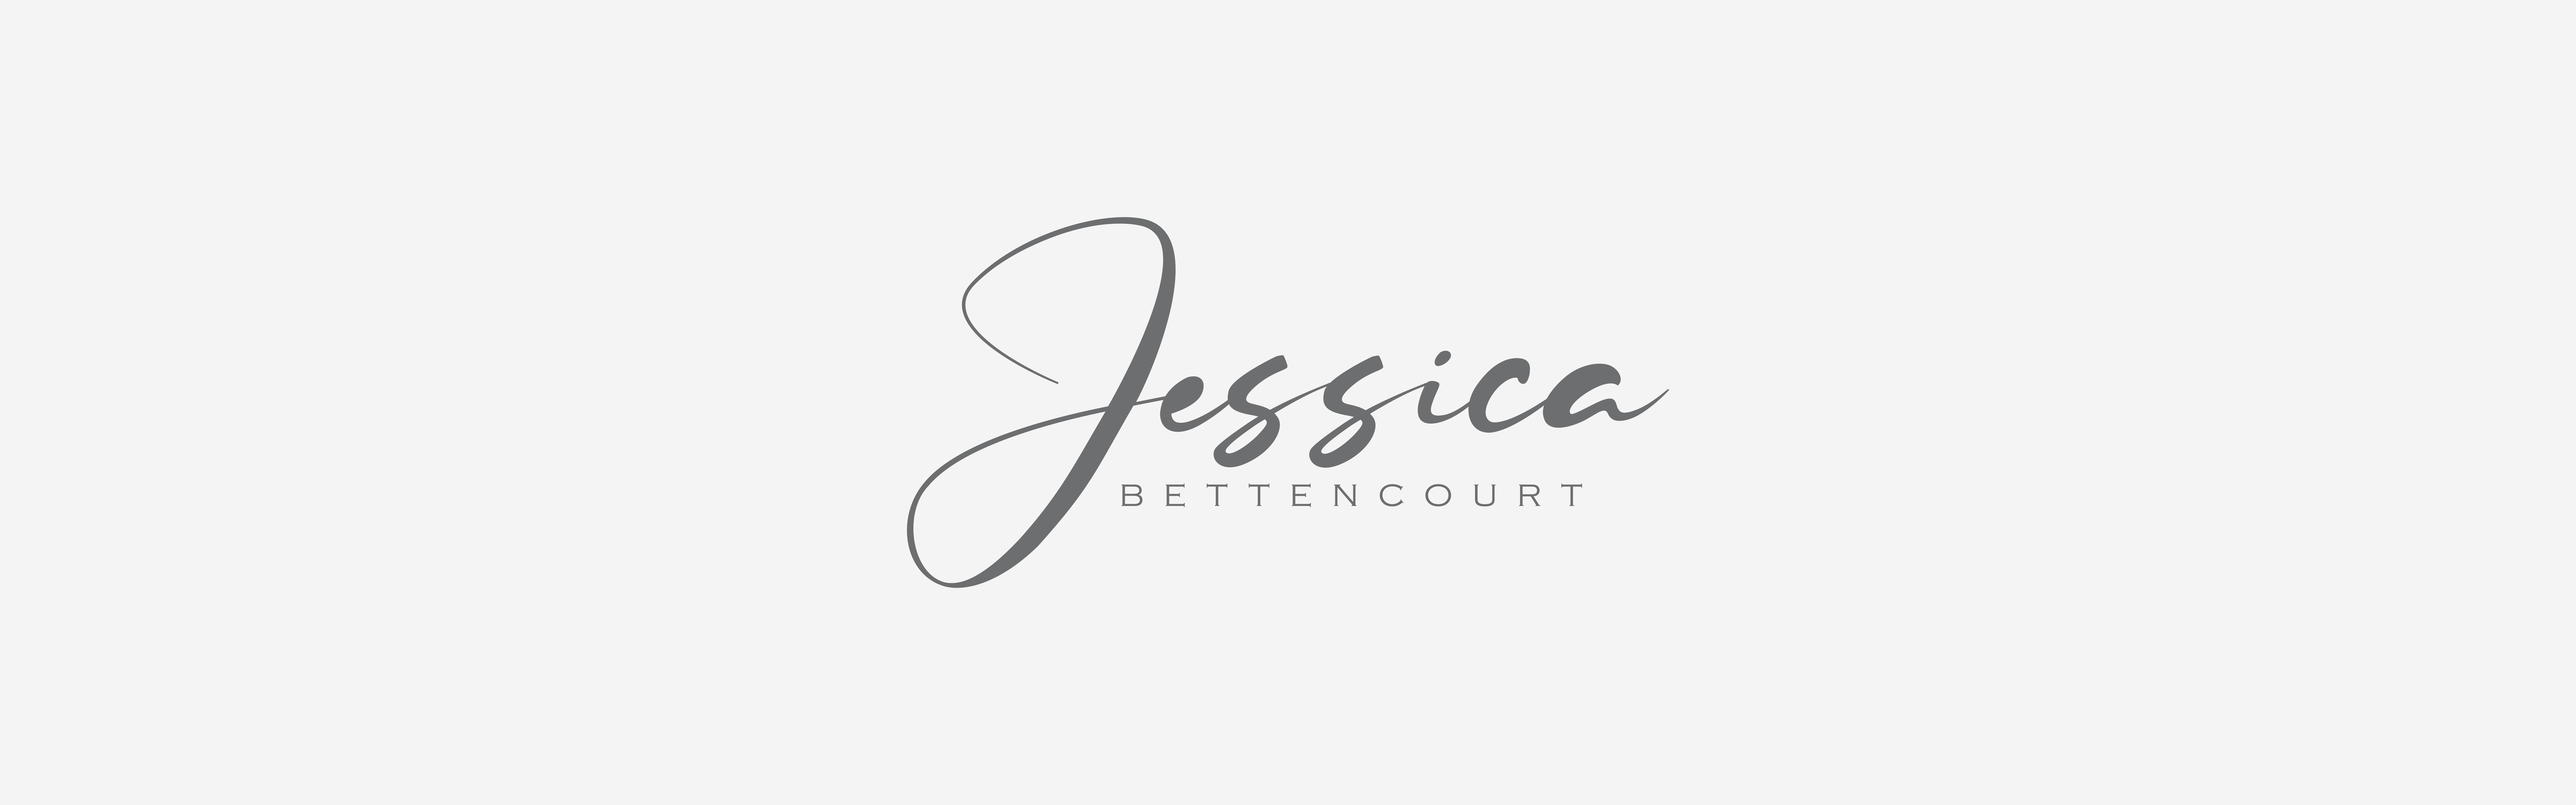 Elegant script logo with Jessica Bettencourt in a stylized font.